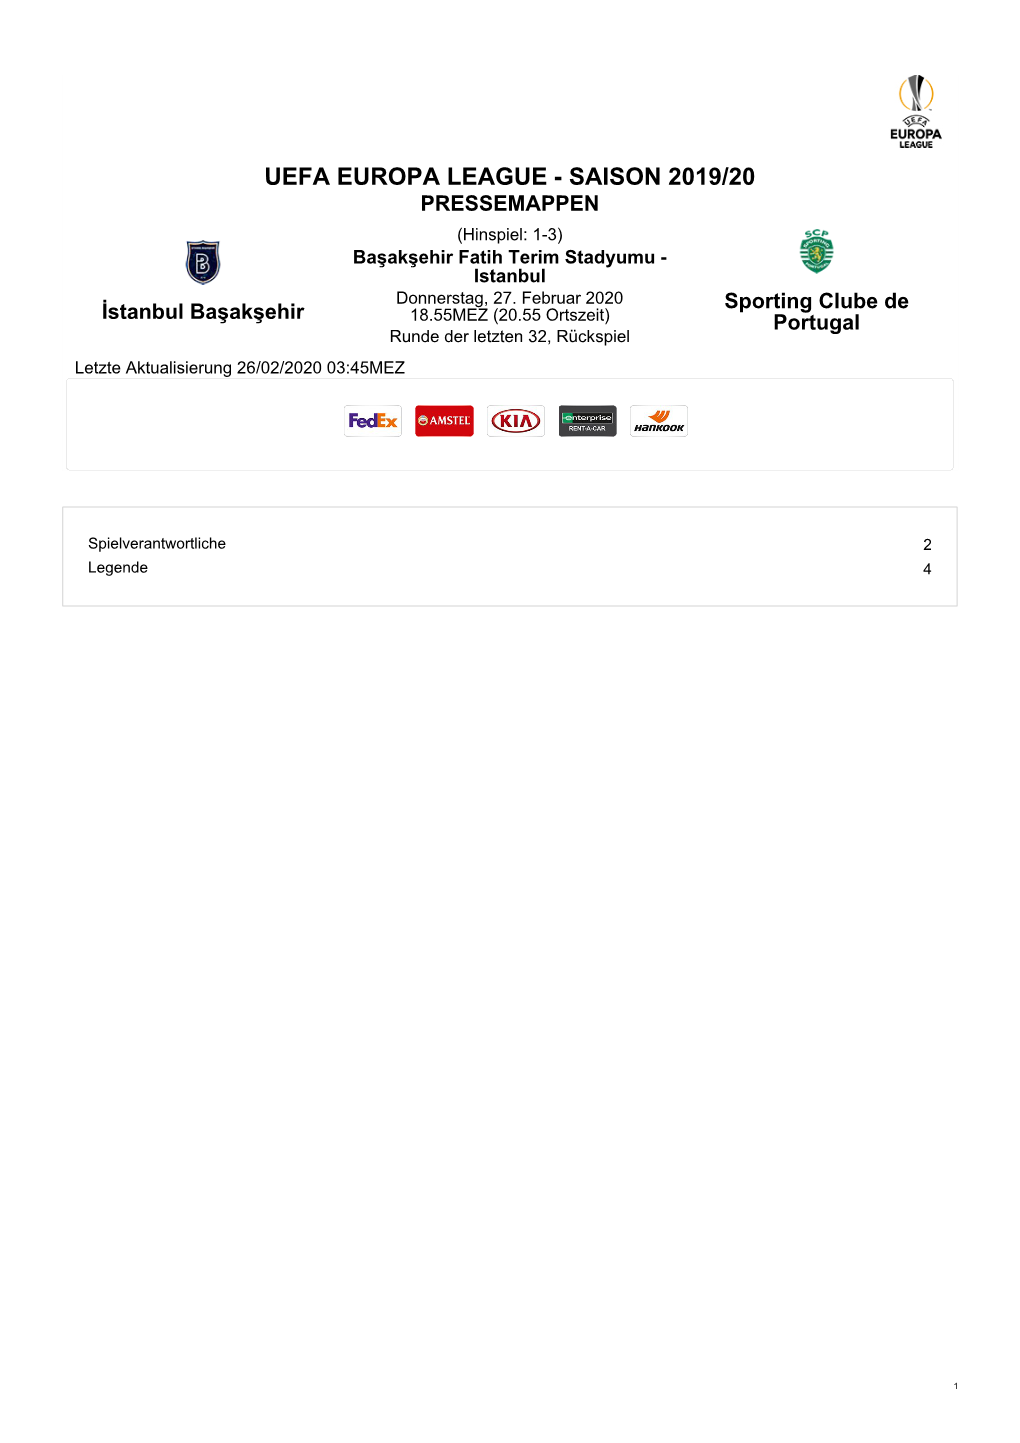 UEFA EUROPA LEAGUE - SAISON 2019/20 PRESSEMAPPEN (Hinspiel: 1-3) Başakşehir Fatih Terim Stadyumu - Istanbul Donnerstag, 27